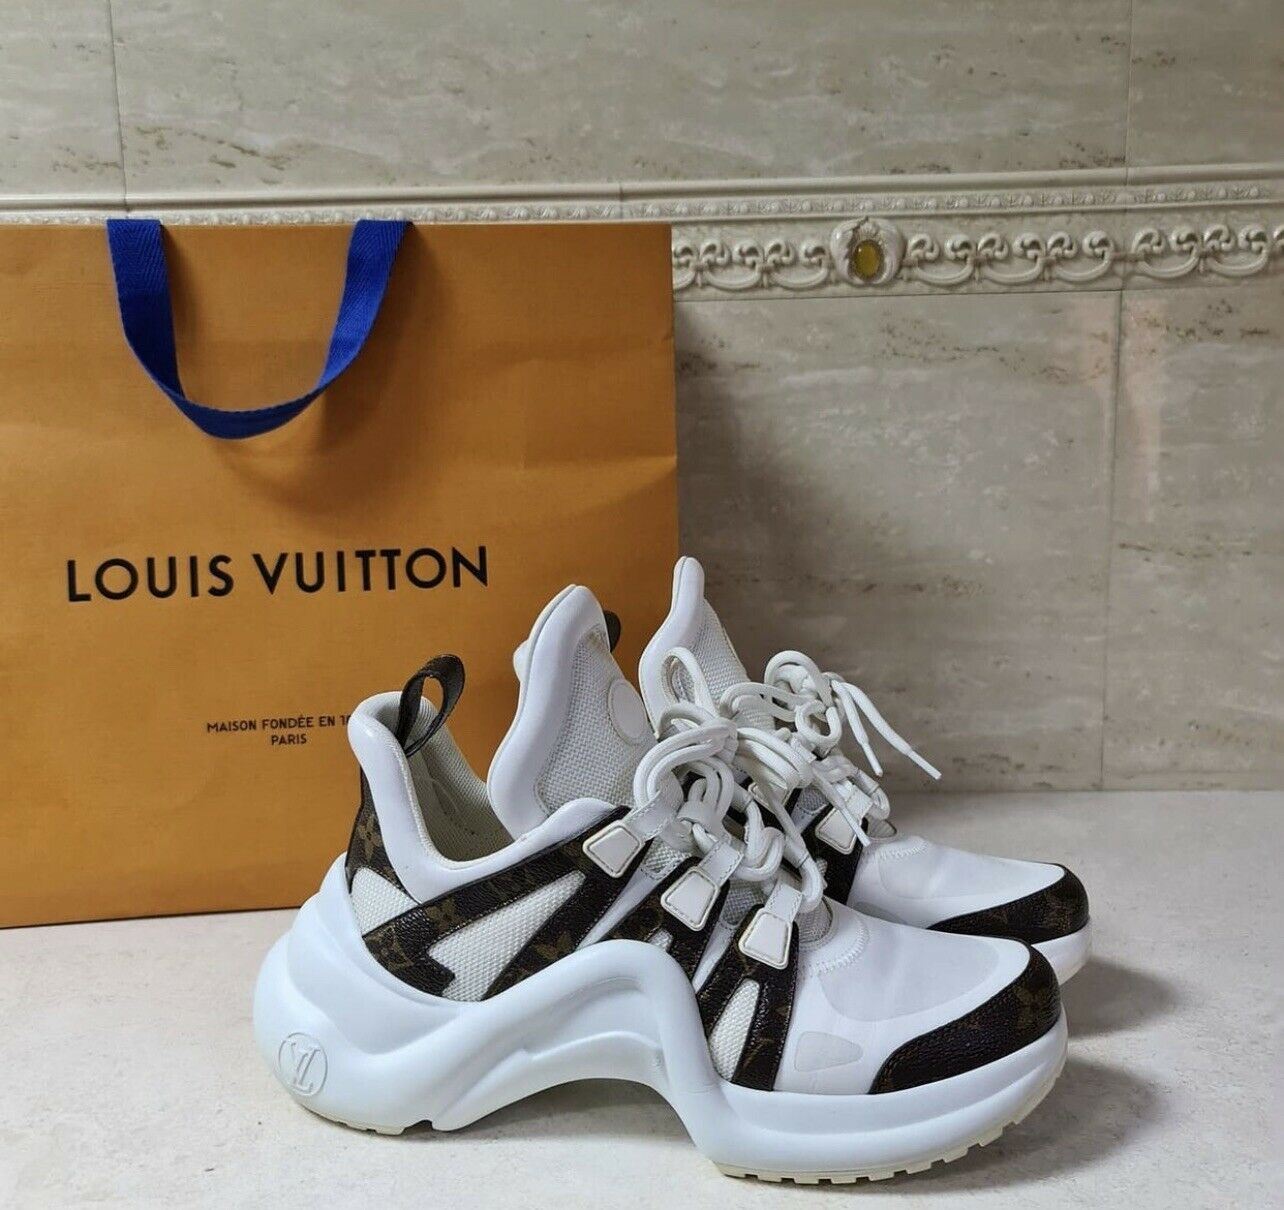 Louis Vuitton ARCHLIGHT Monogram Leather Sneakers Trainers Sz.38